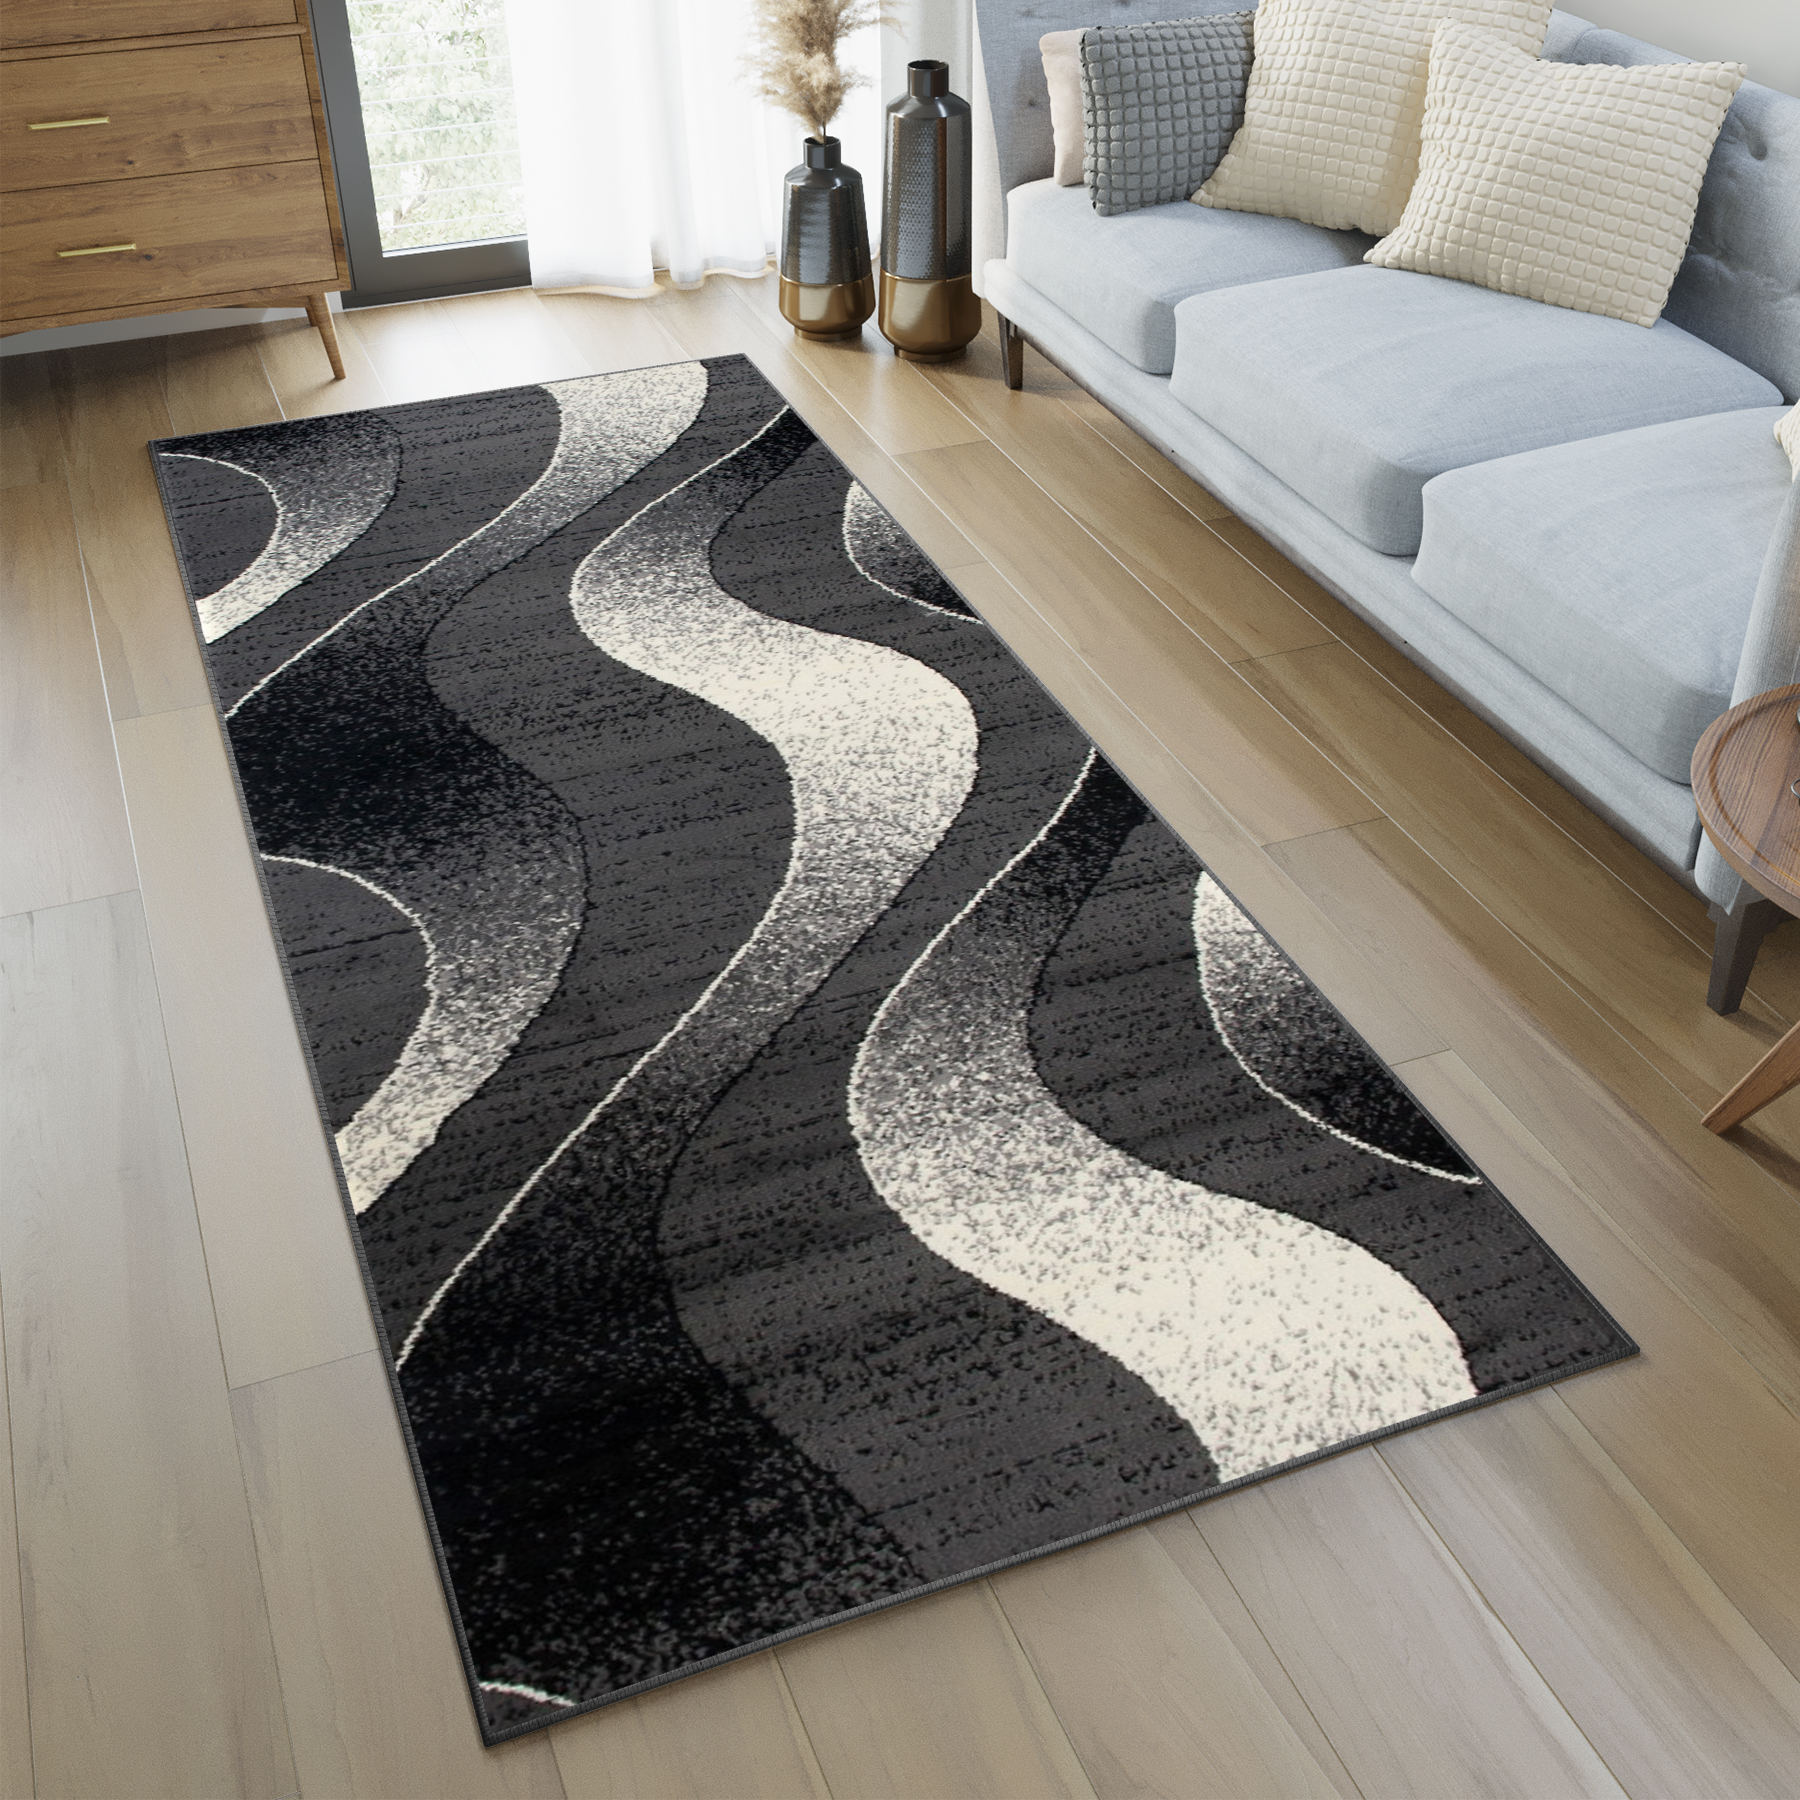 Carpet Runner Dream Dark Grey Abstract Waves